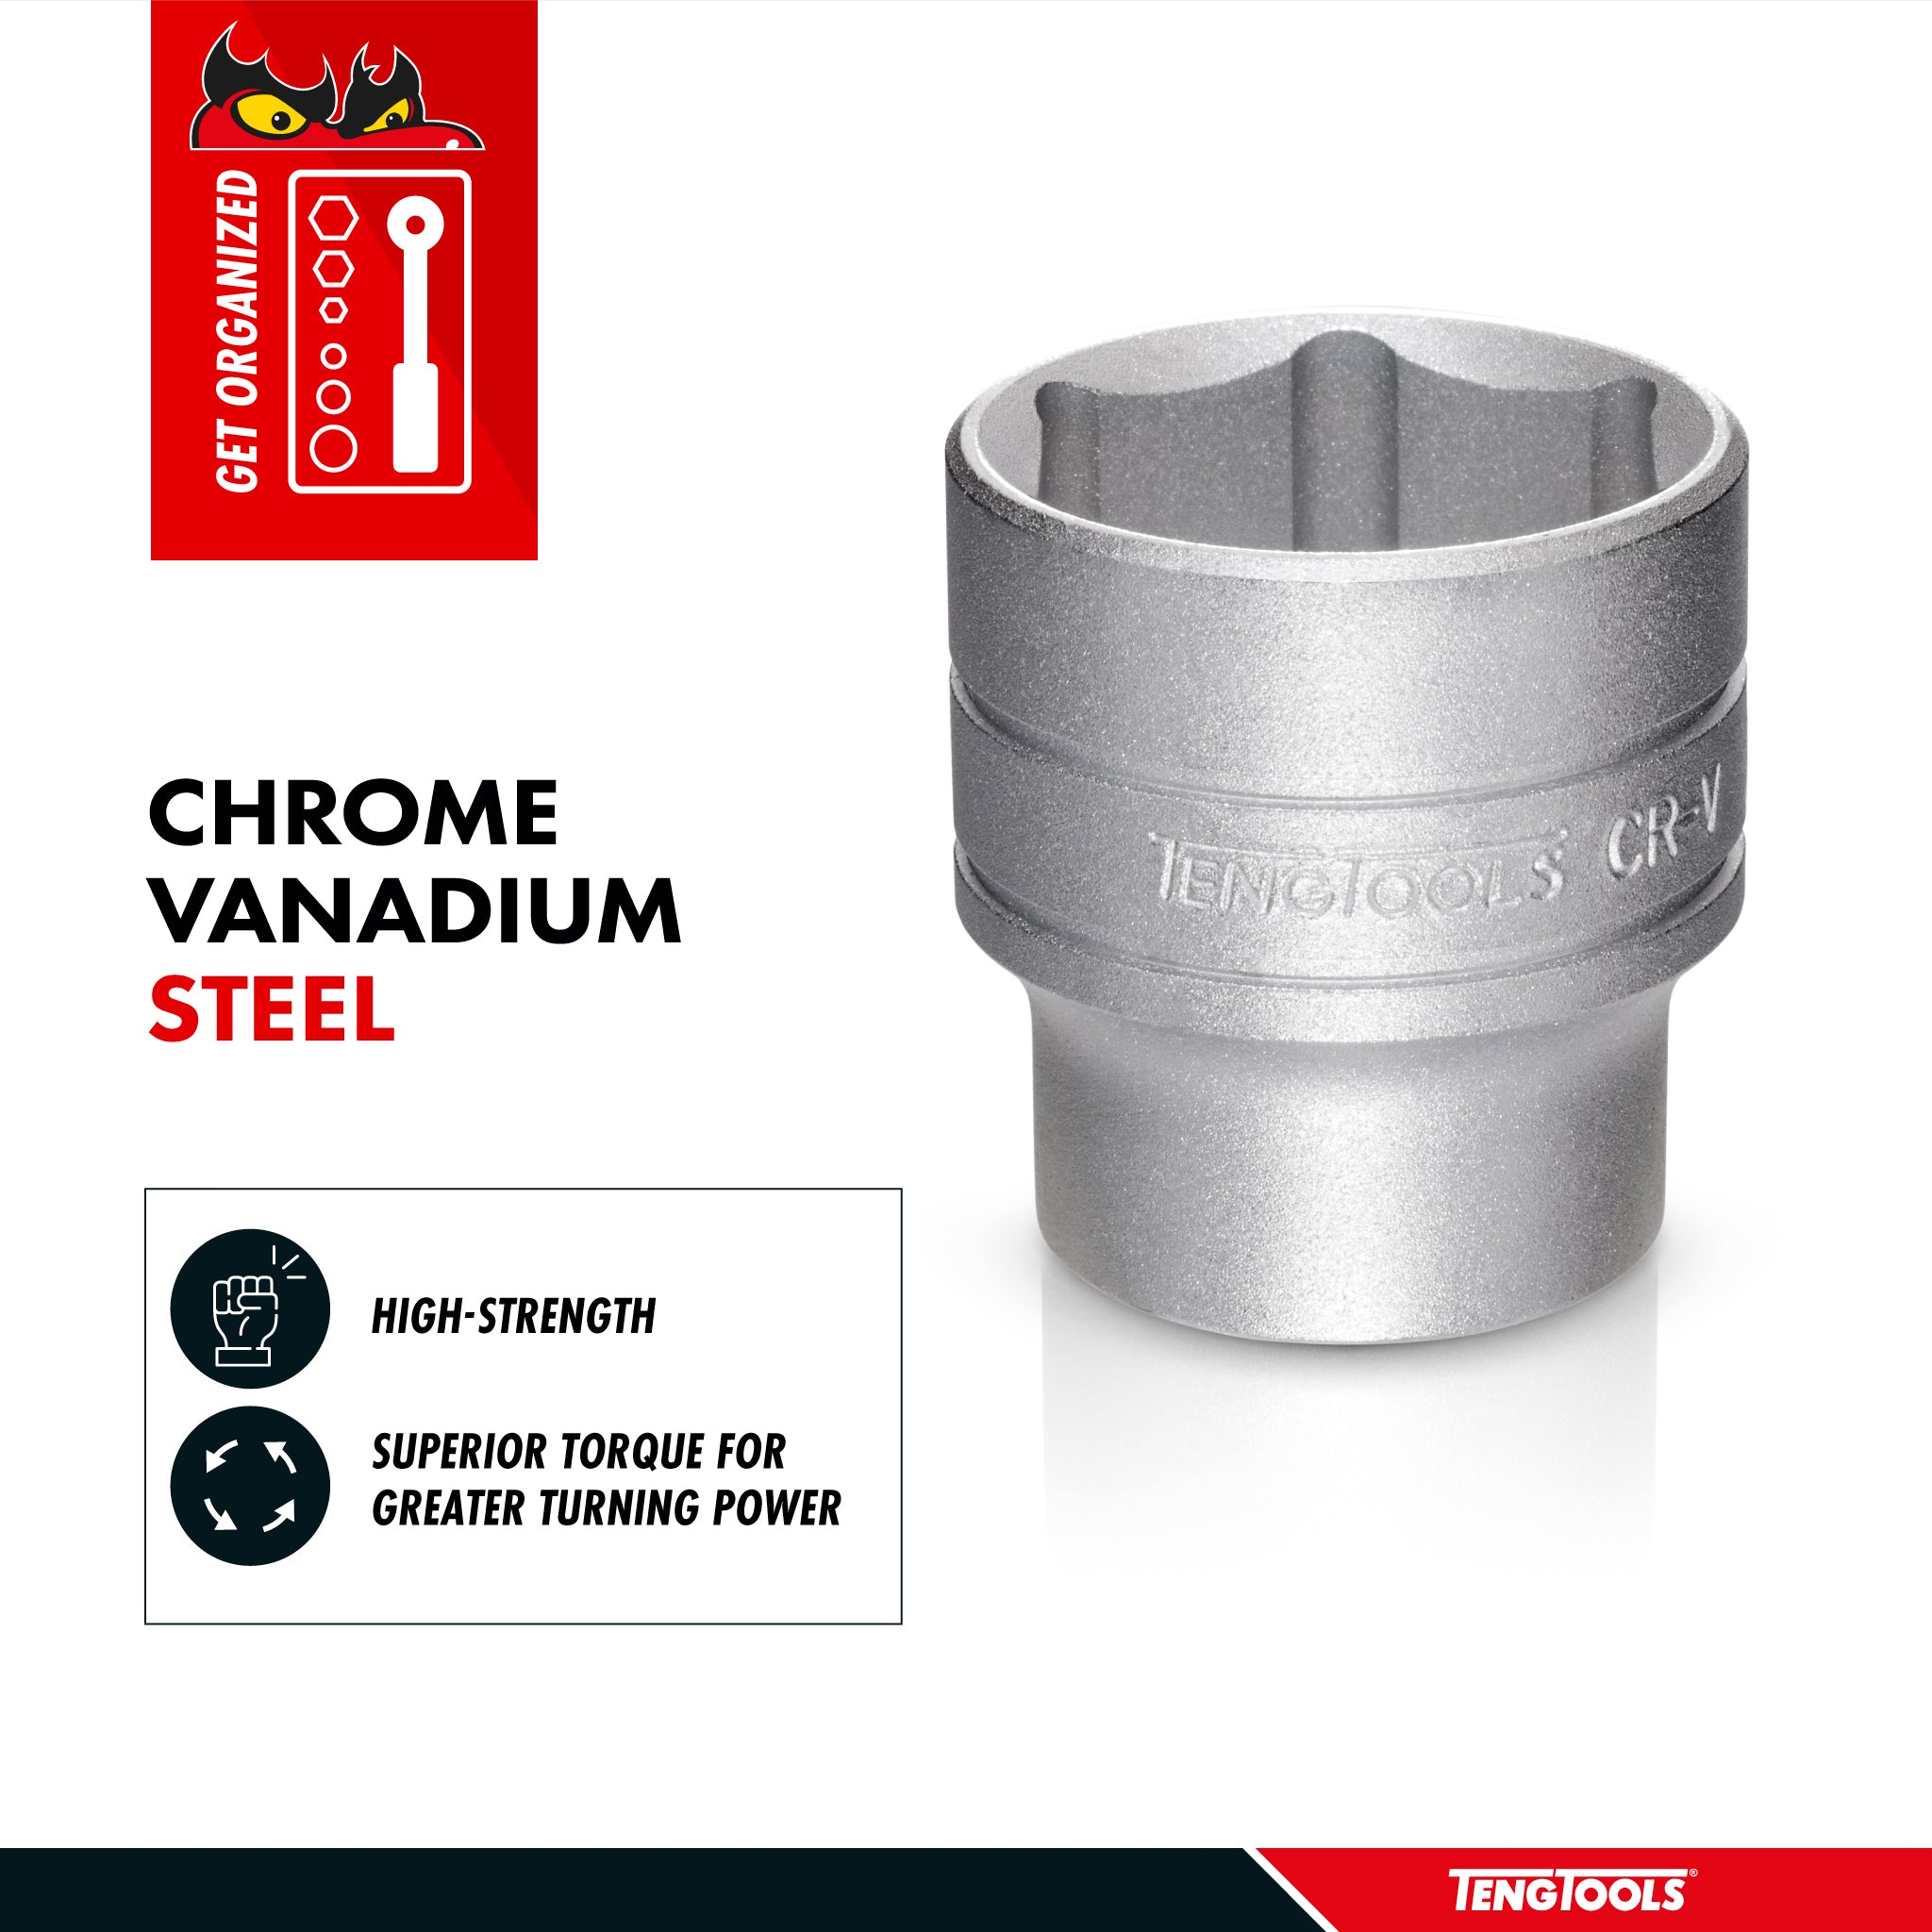 Teng Tools 1/2 Inch Drive 6 Point Metric Shallow Chrome Vanadium Sockets - 25mm